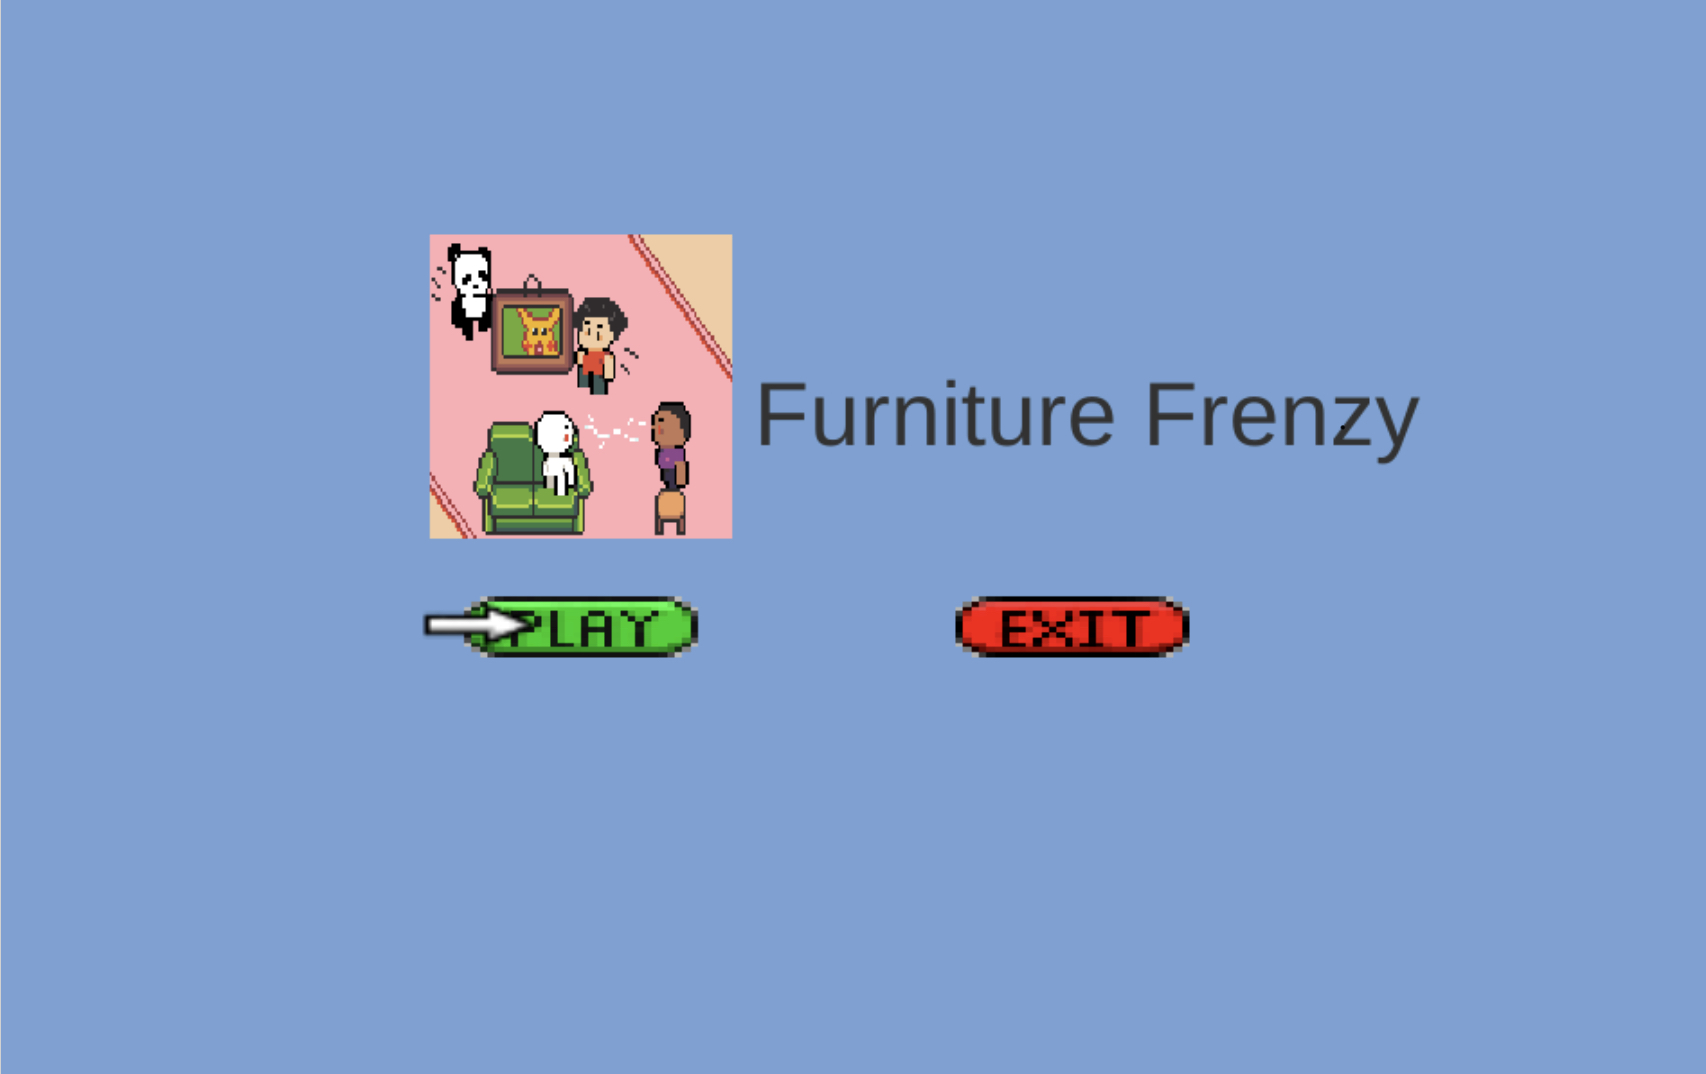 Furniture Frenzy